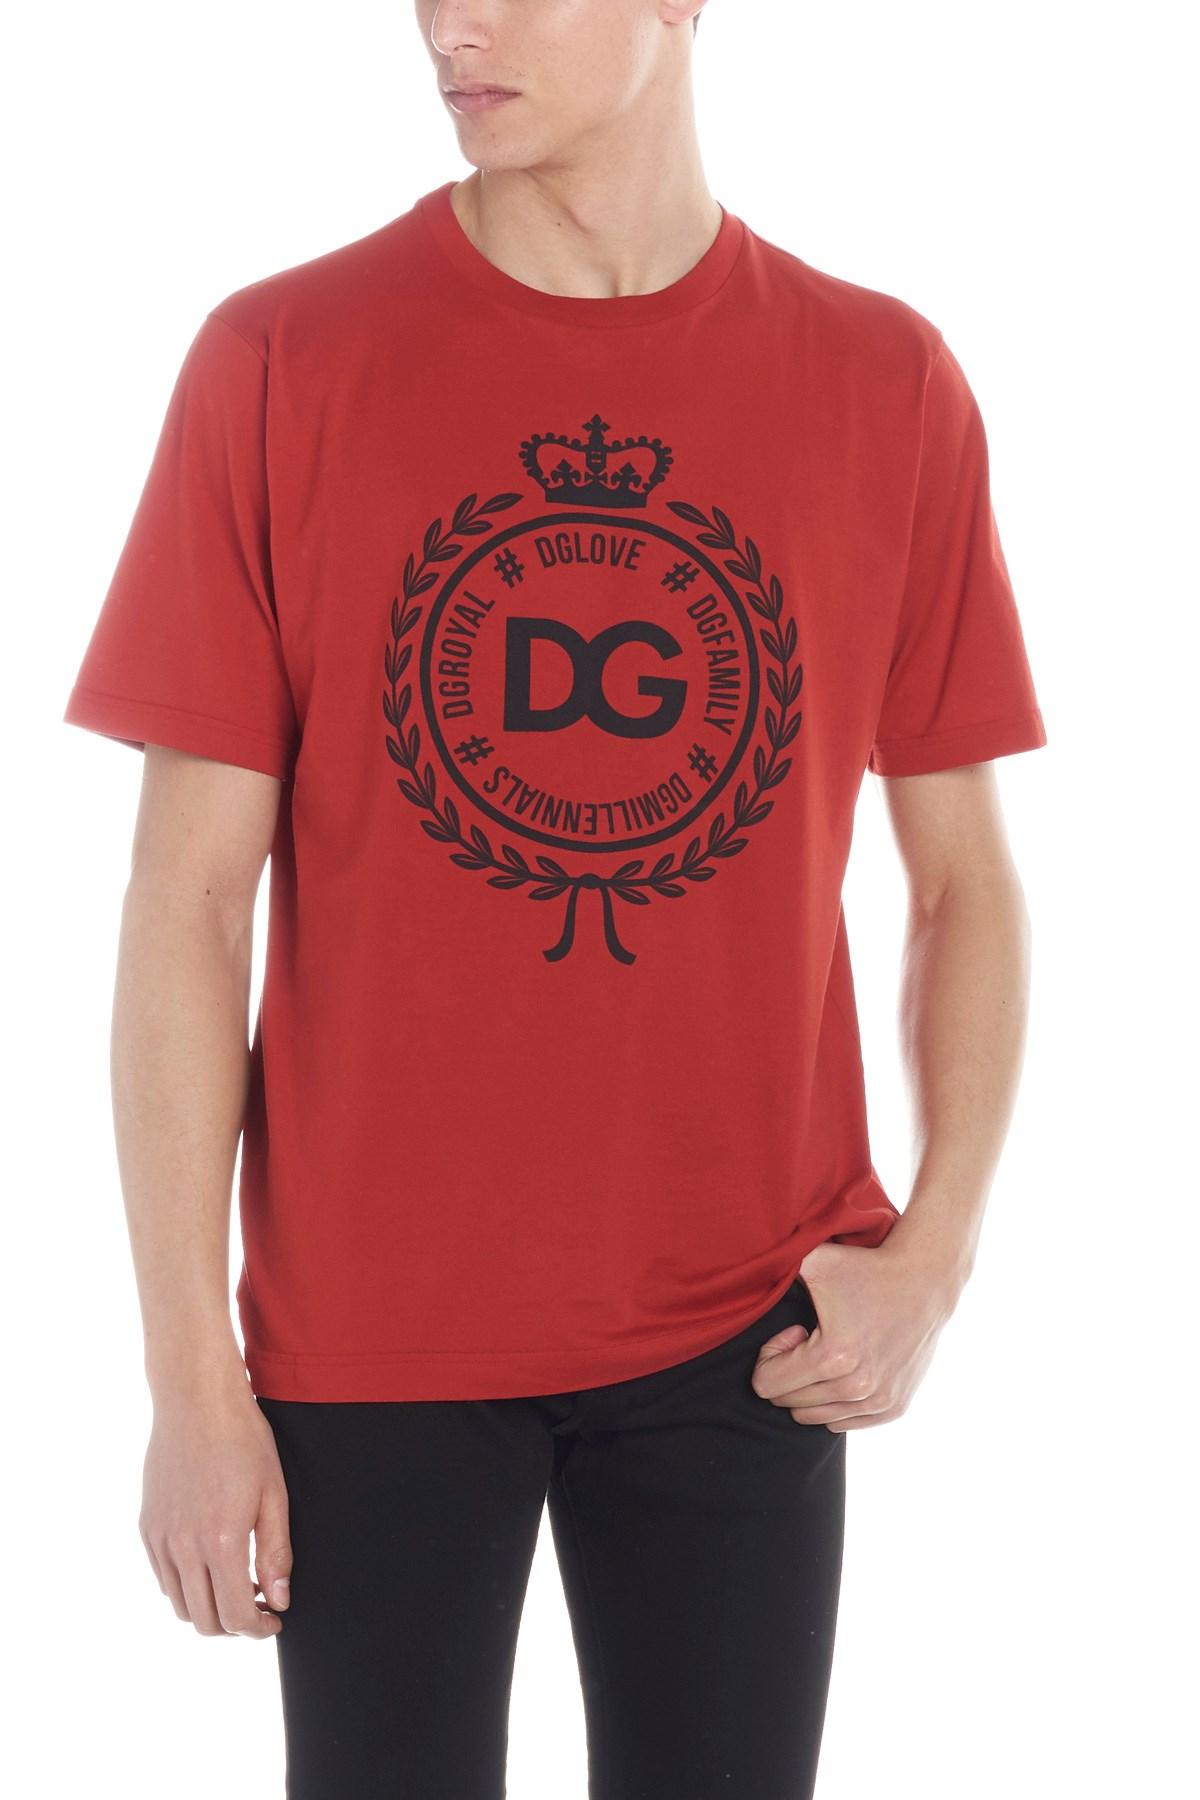 Dolce & Gabbana Logo T-shirt in Red for Men - Lyst